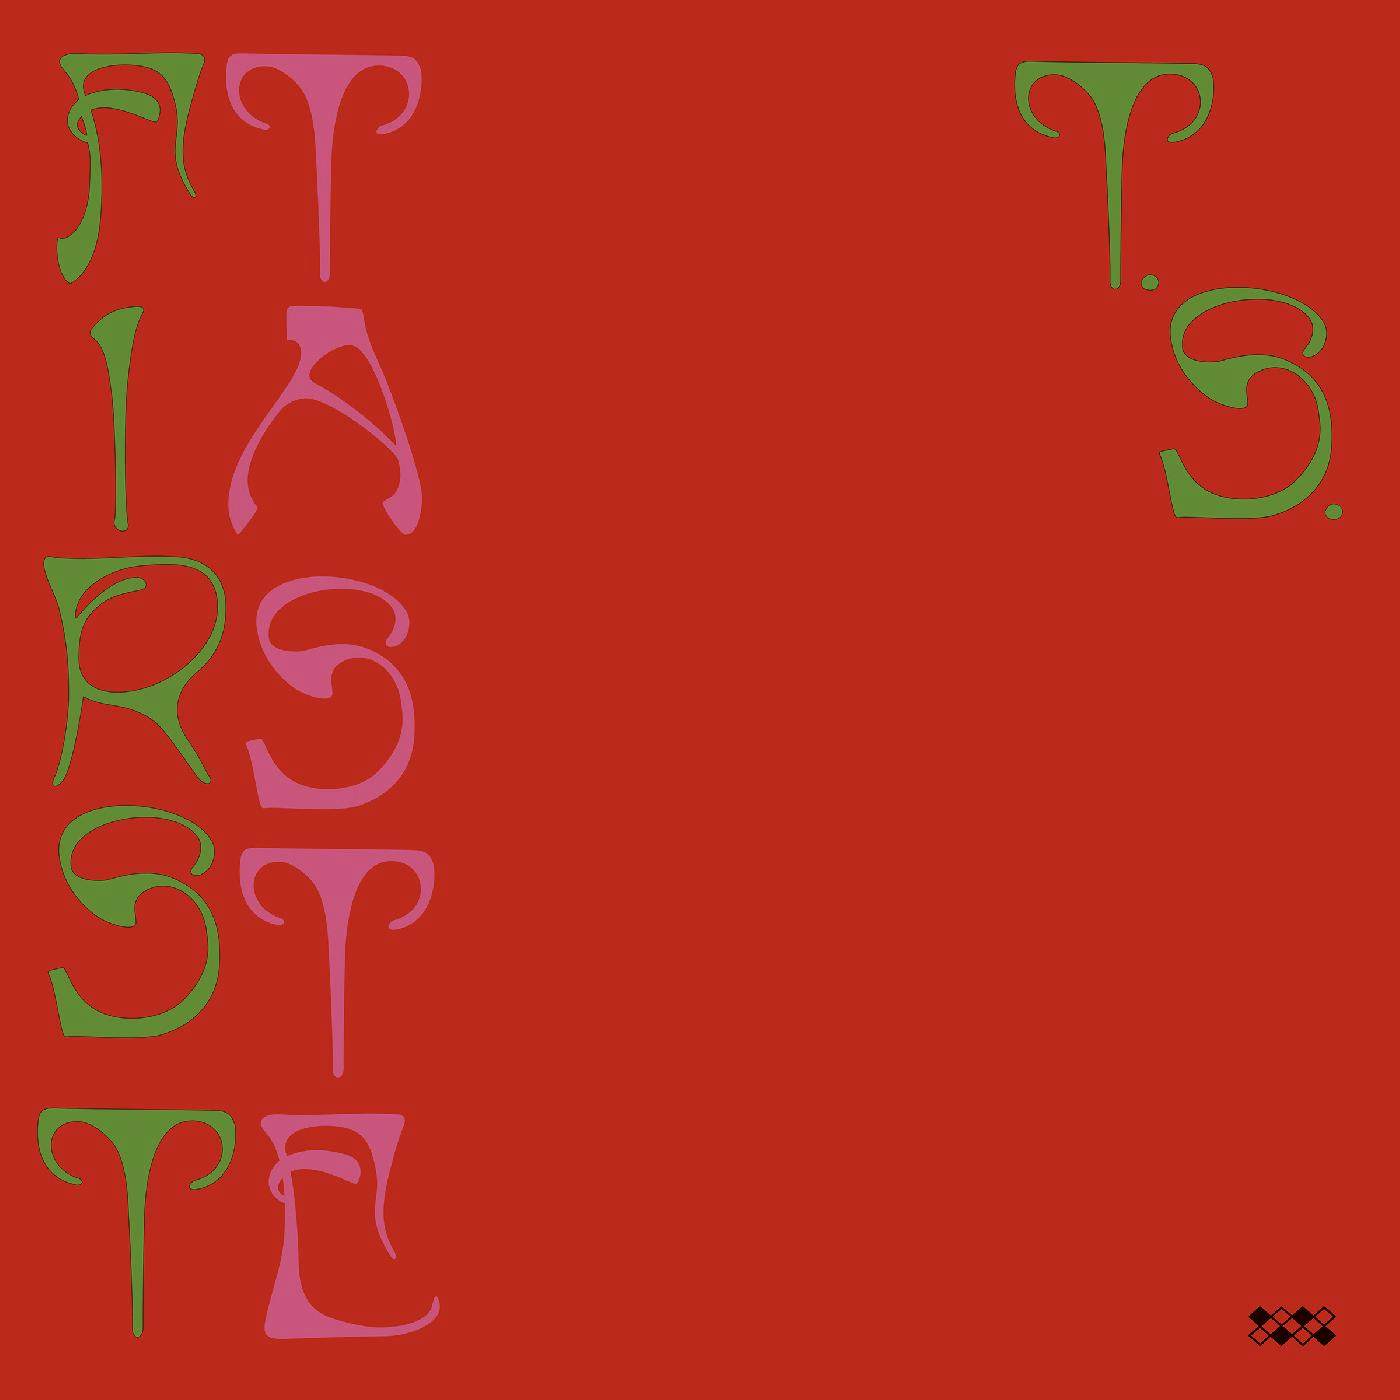 Ty Segall First Taste Vinyl Record